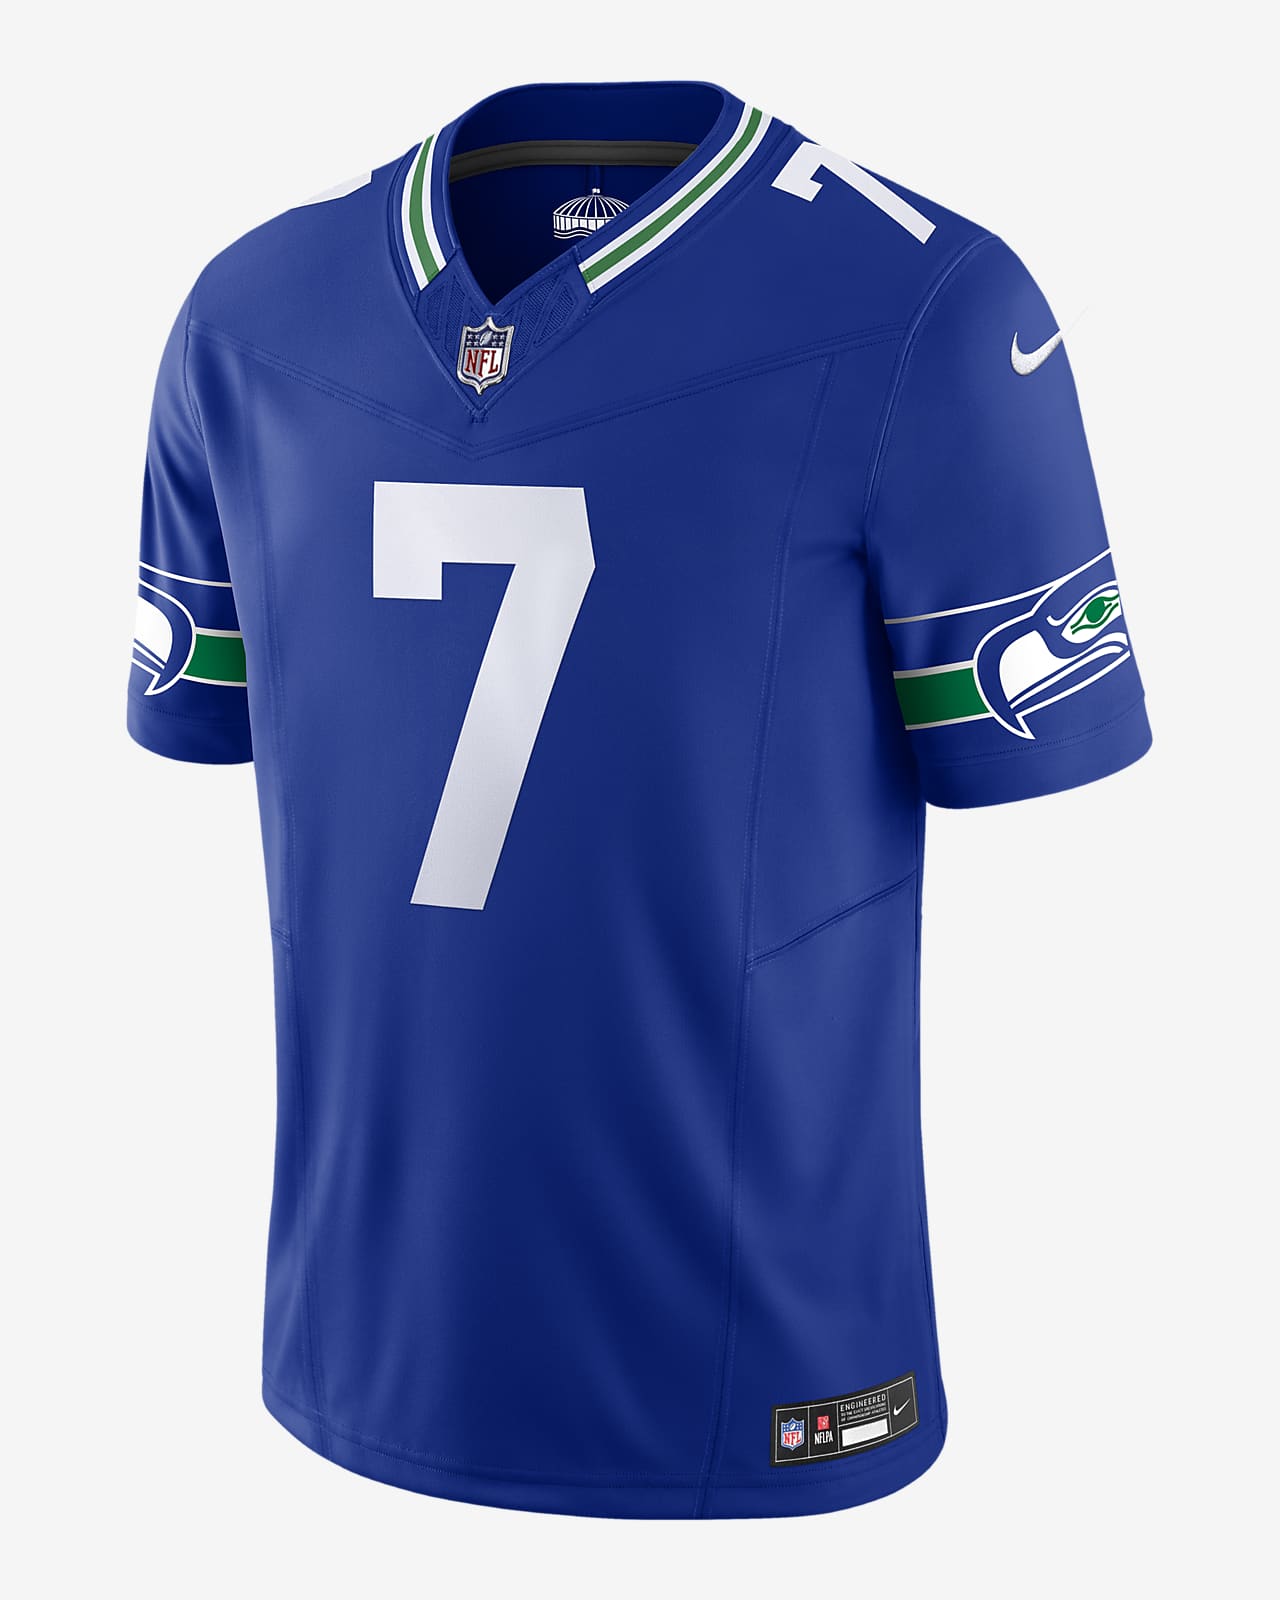 Jersey de fútbol americano Nike Dri-FIT de la NFL Limited para hombre Geno Smith Seattle Seahawks